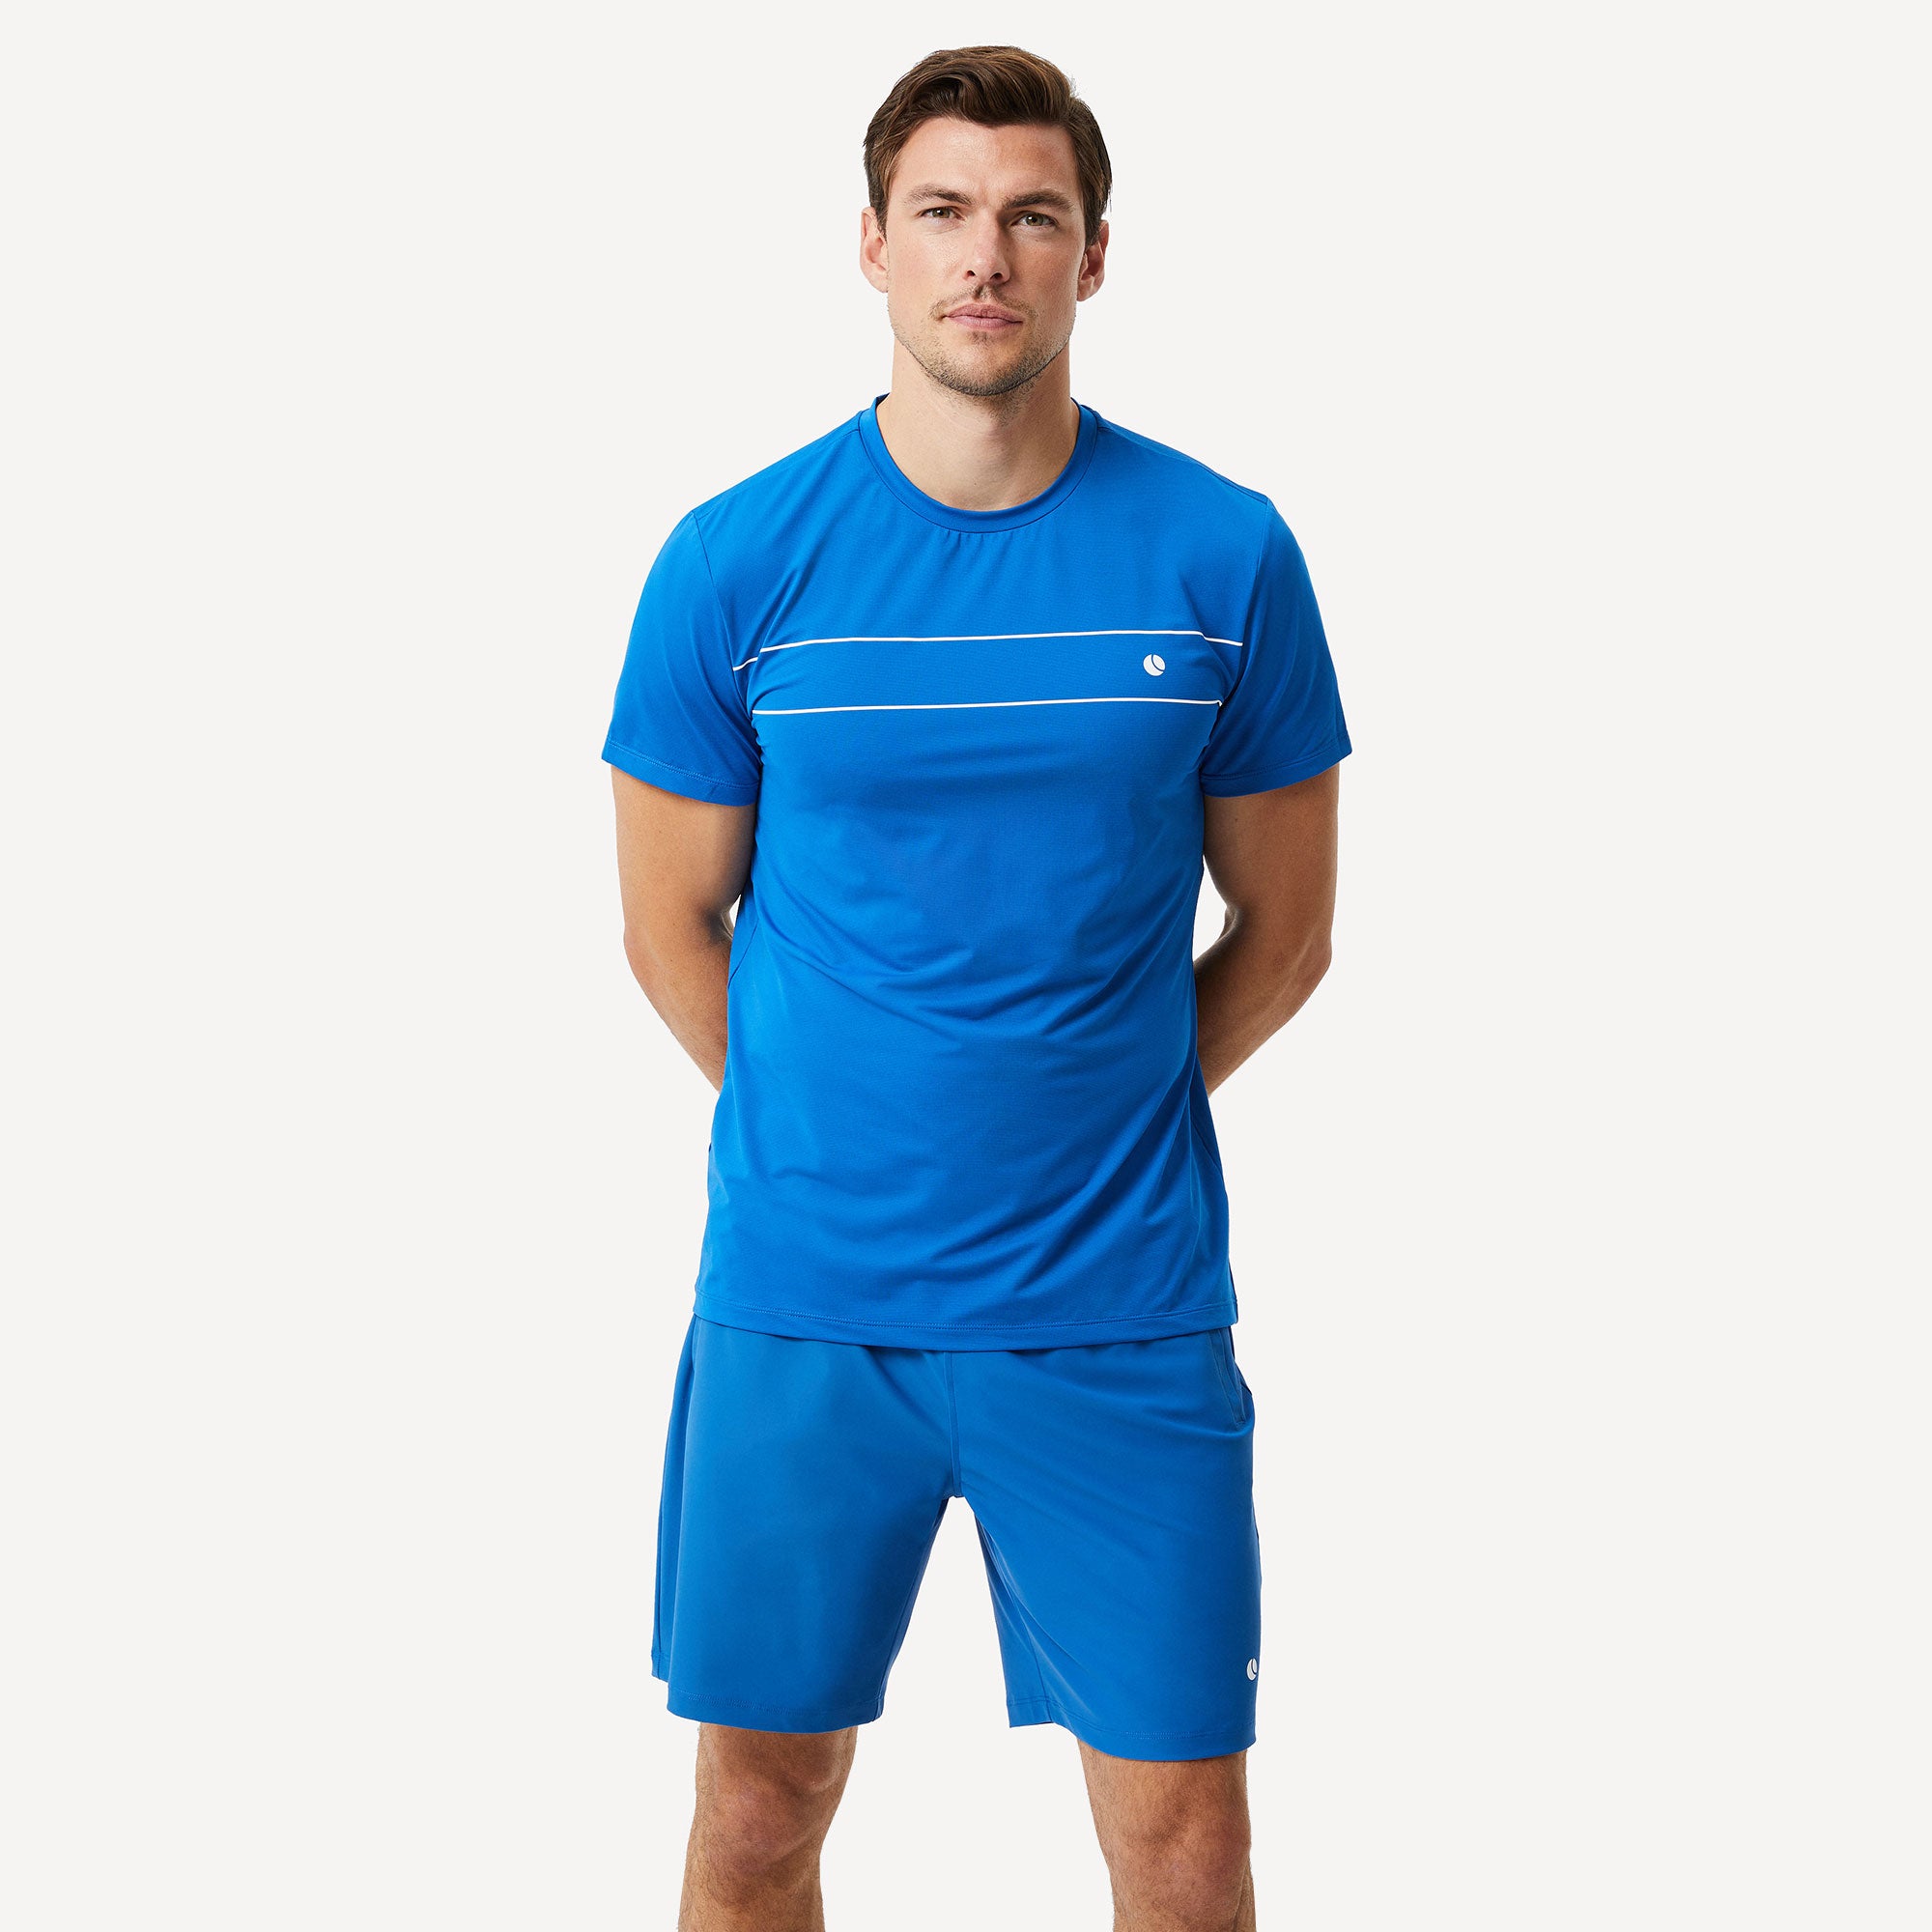 Björn Borg Ace Men's Light Tennis Shirt - Blue (1)